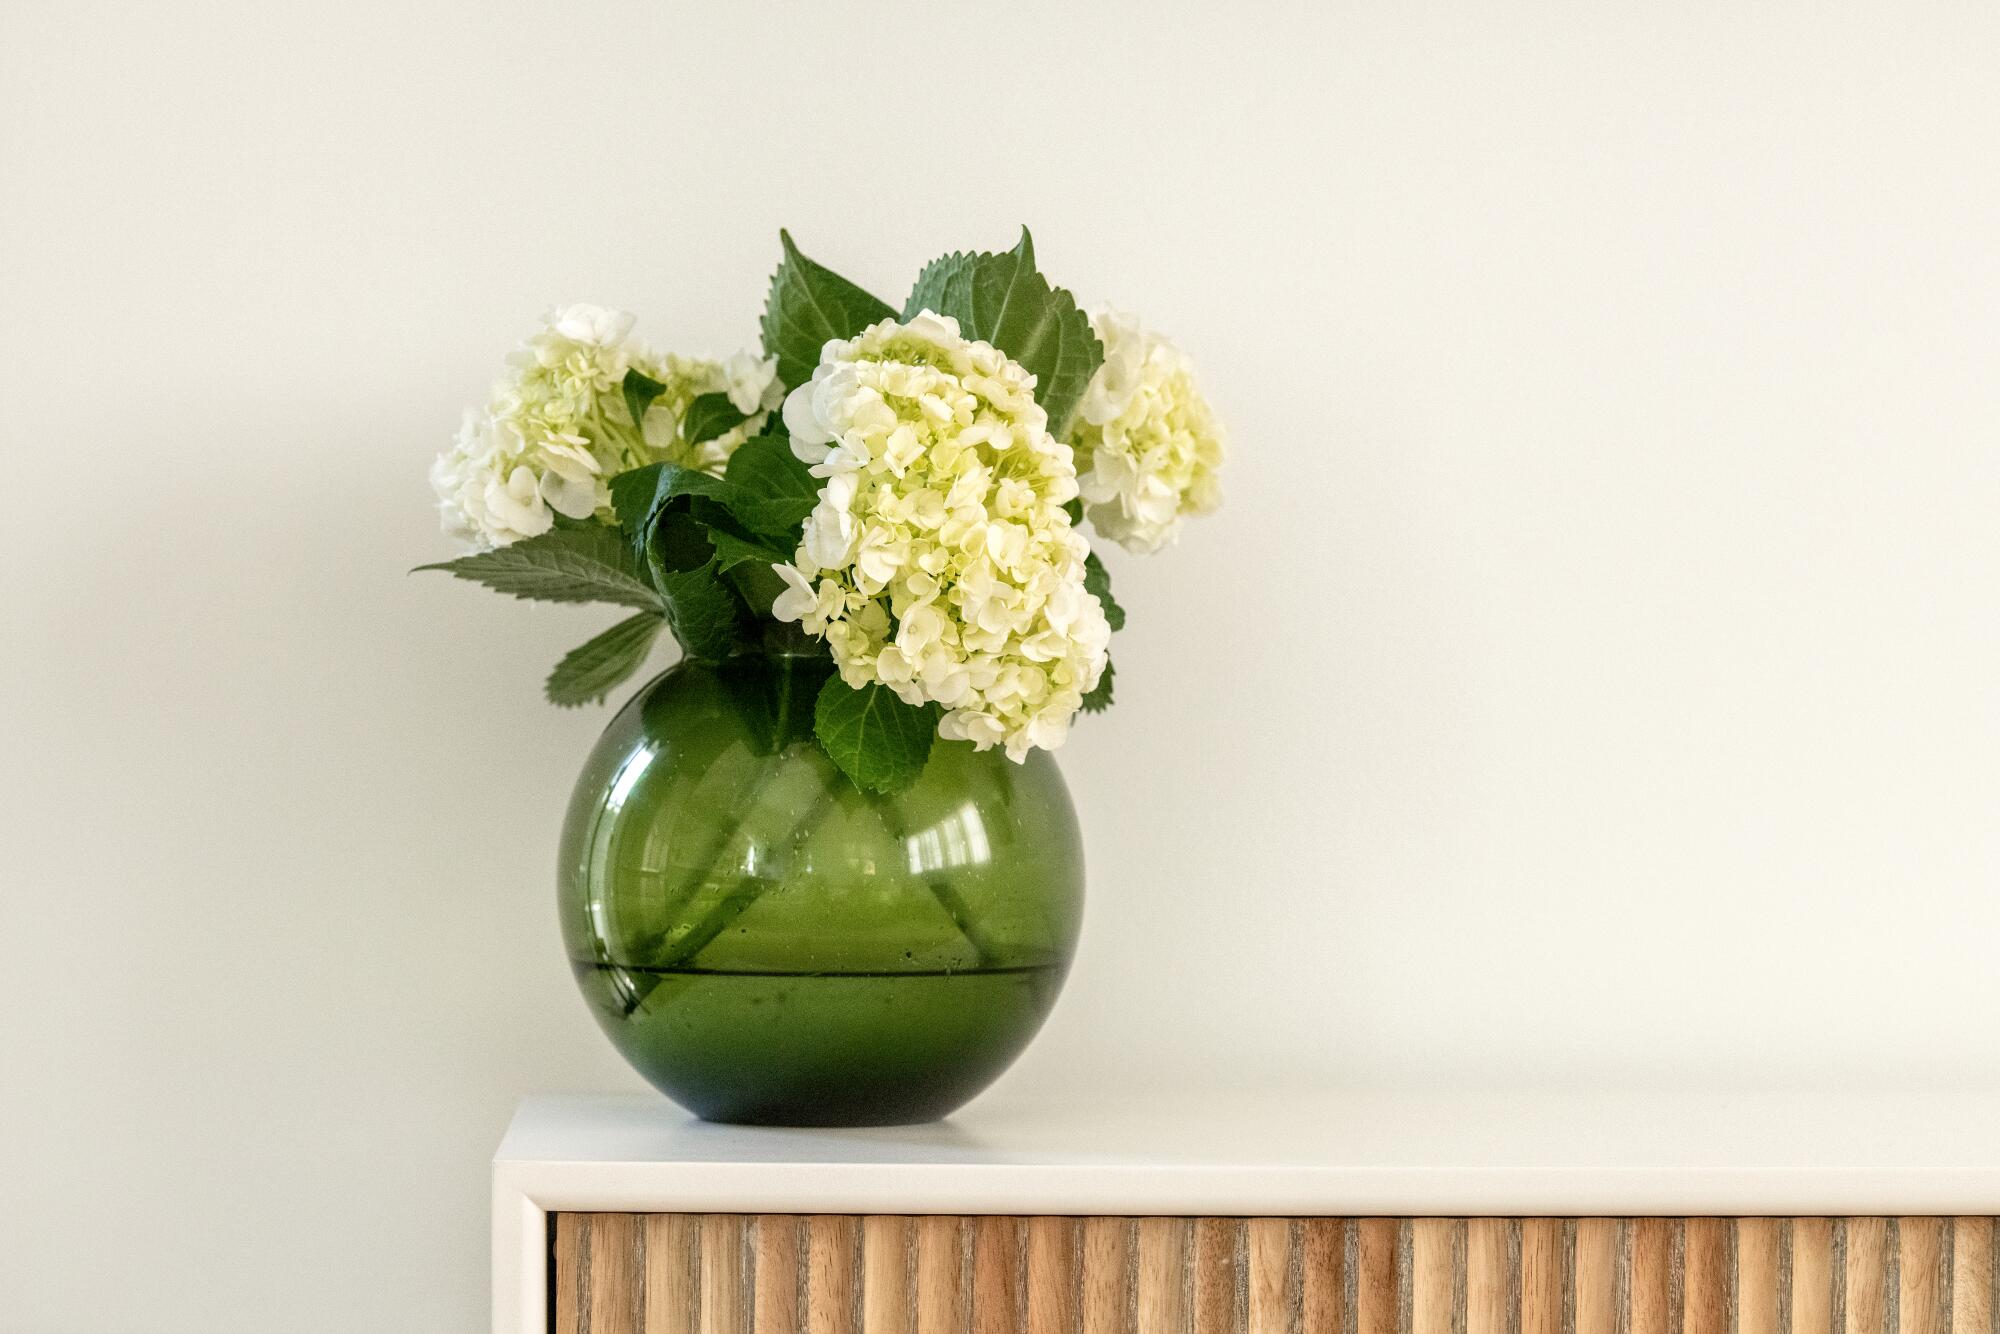 White hydrangeas in a green vase on a credenza.